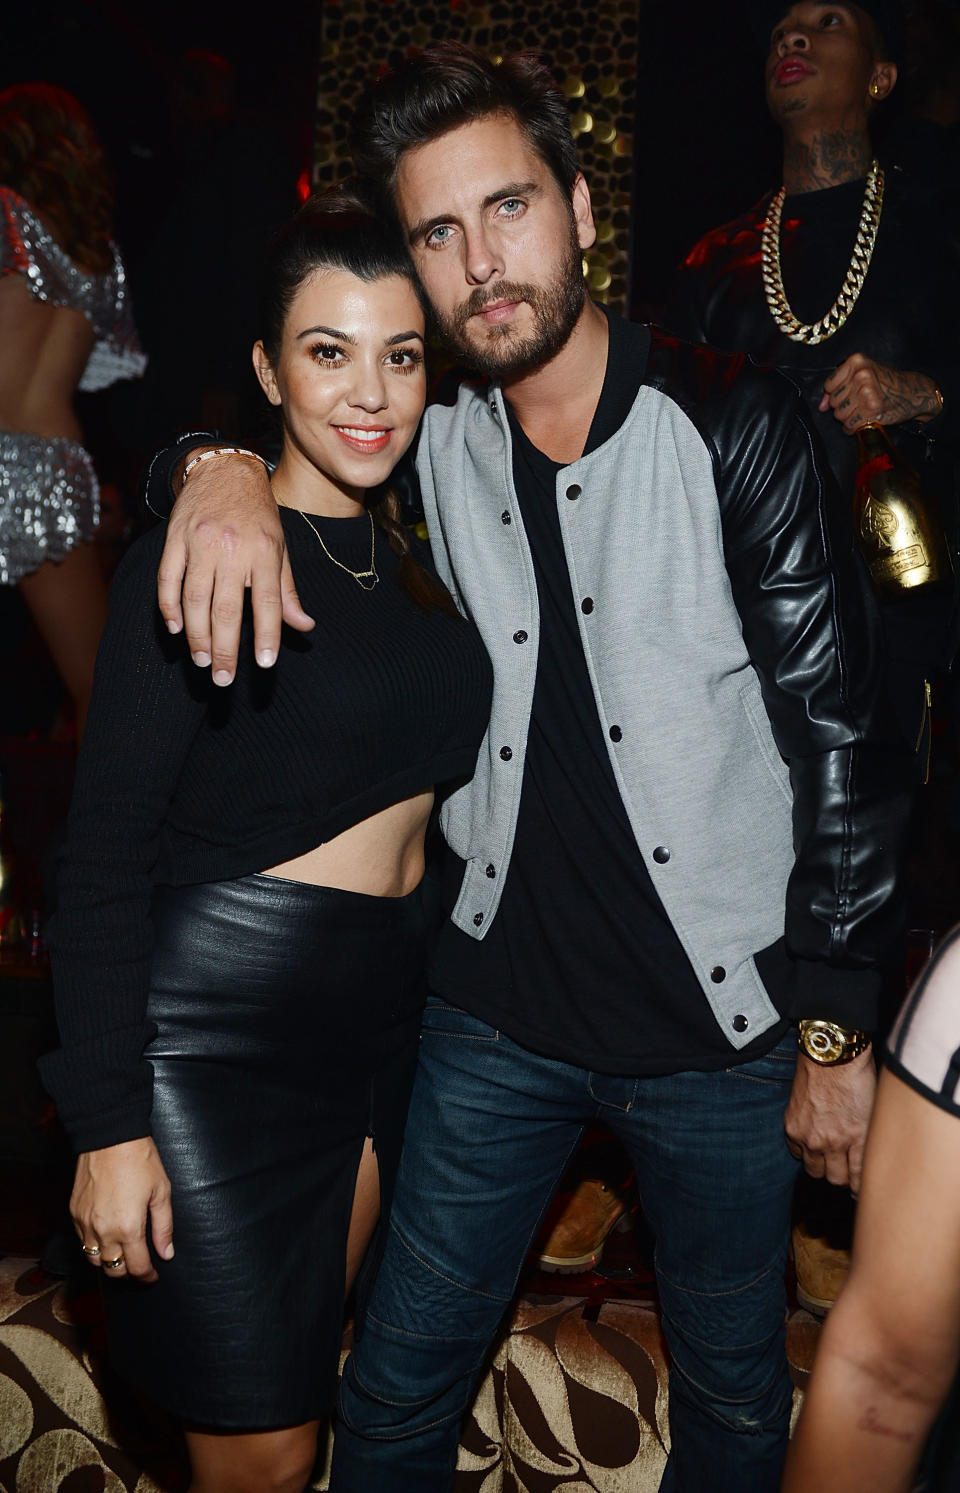 Kourtney Kardashian and Scott Disick pose at Kim Kardashian's 33rd birthday party on October 25, 2013